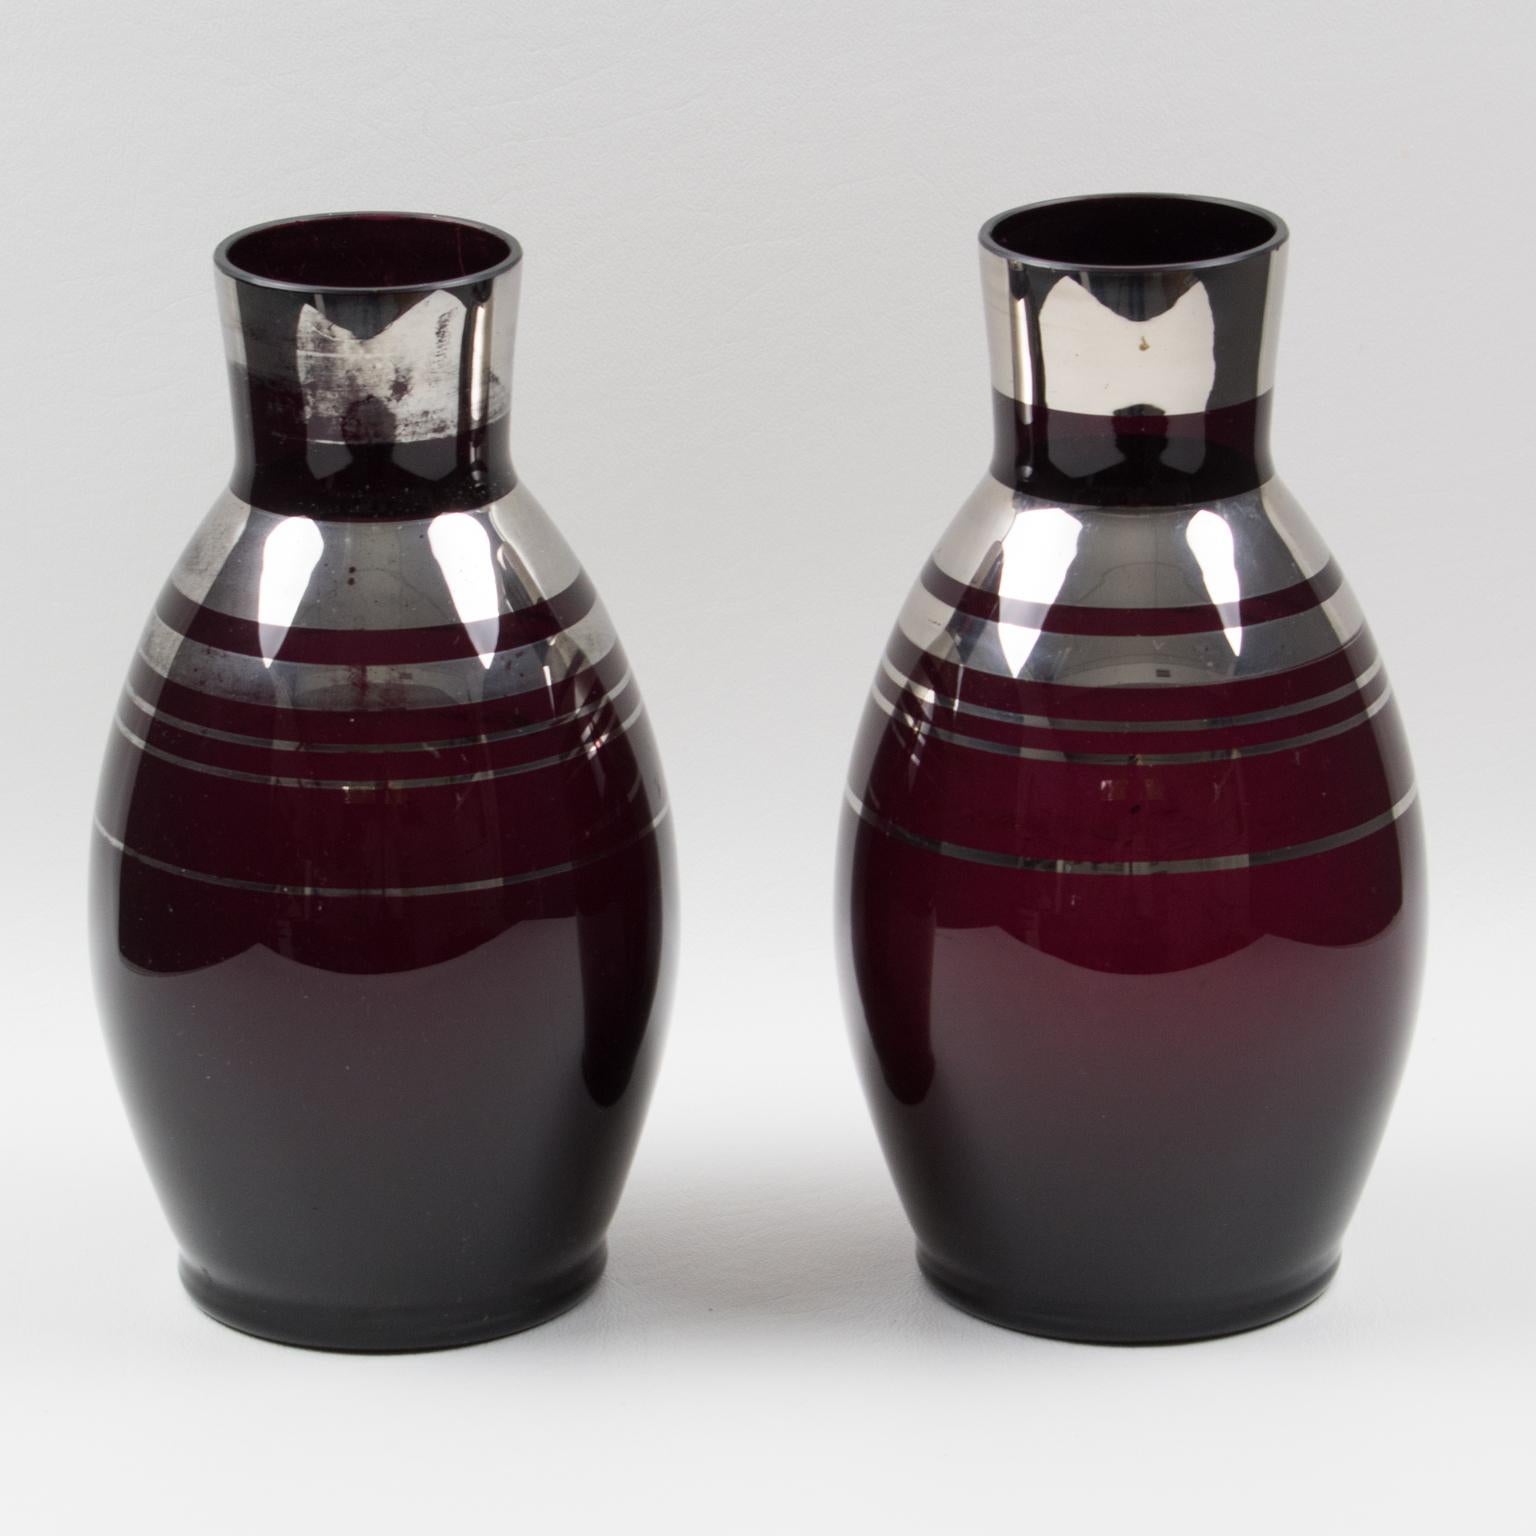 Fains Art Deco Silver Overlay on Black Opaline Glass Vase, a pair, 1930s For Sale 3